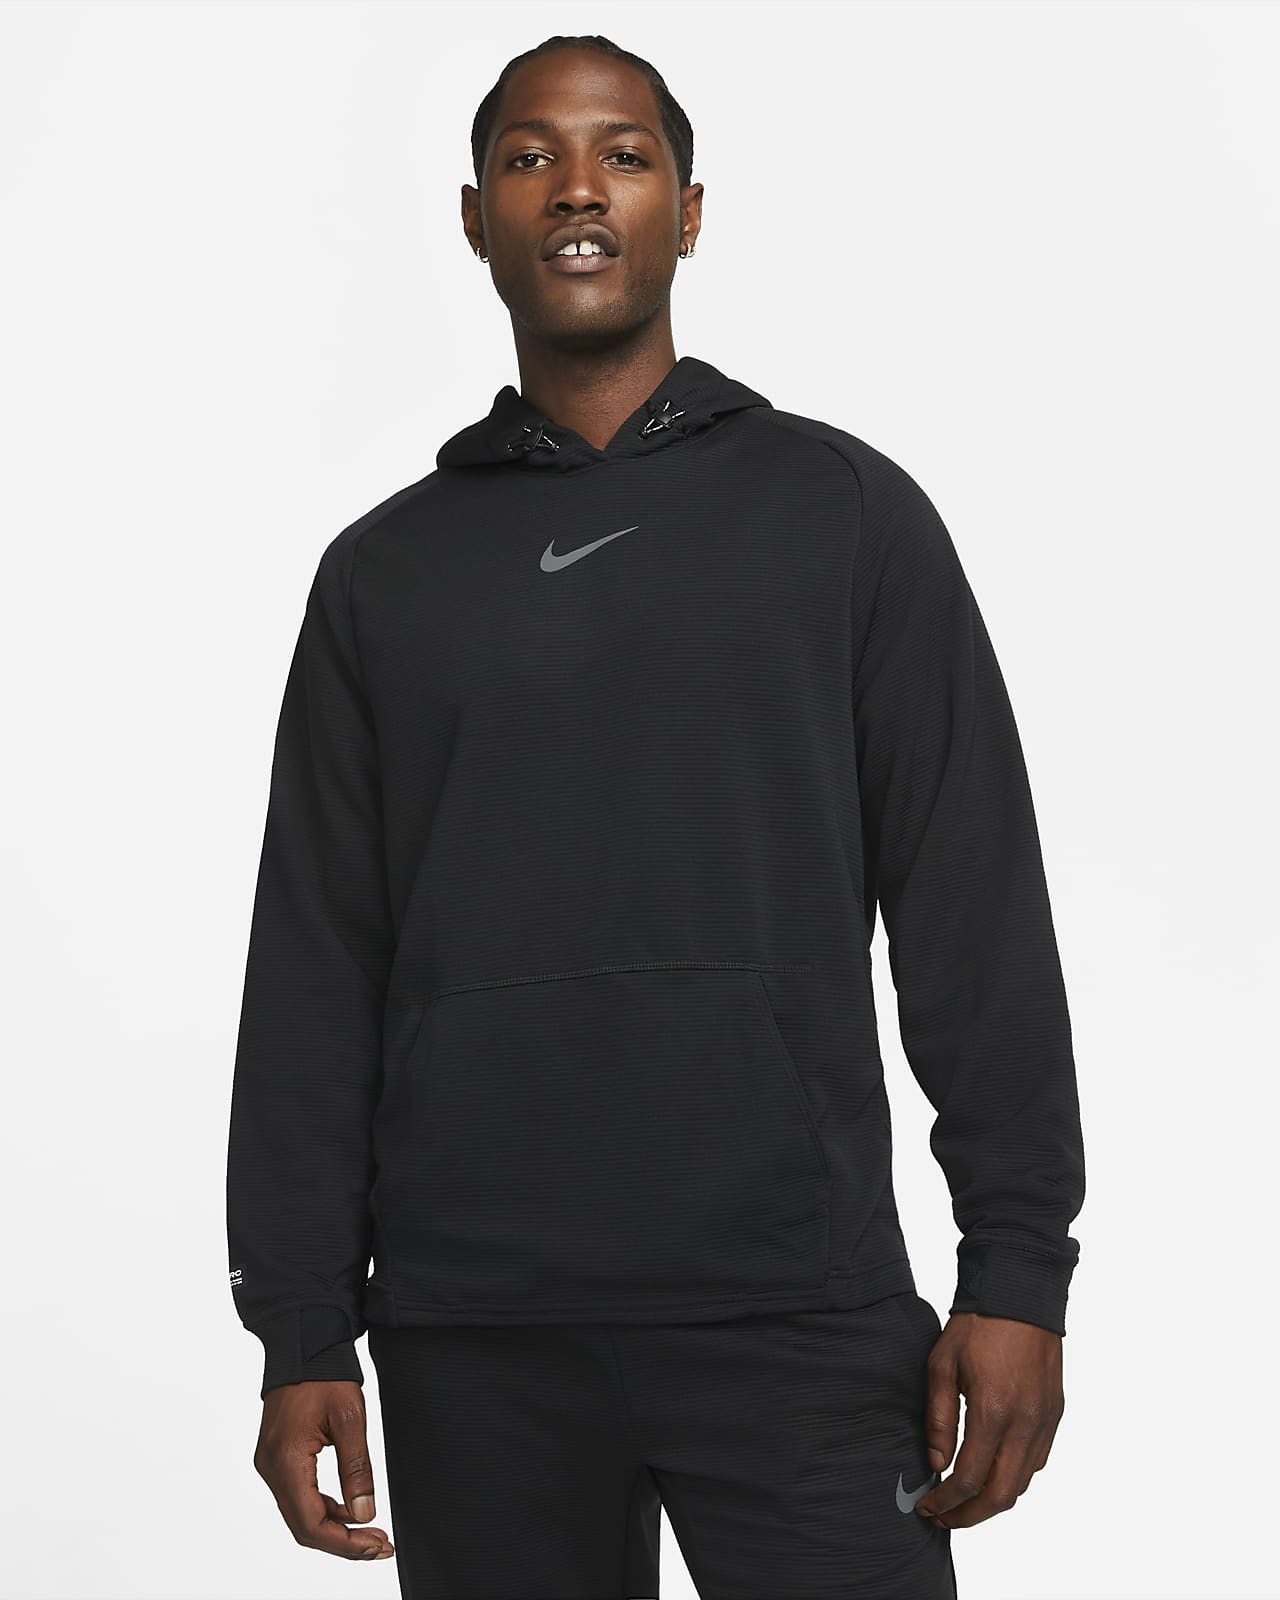 lamp cloth look for Nike Pro Men's Pullover Fleece Training Hoodie. Nike LU